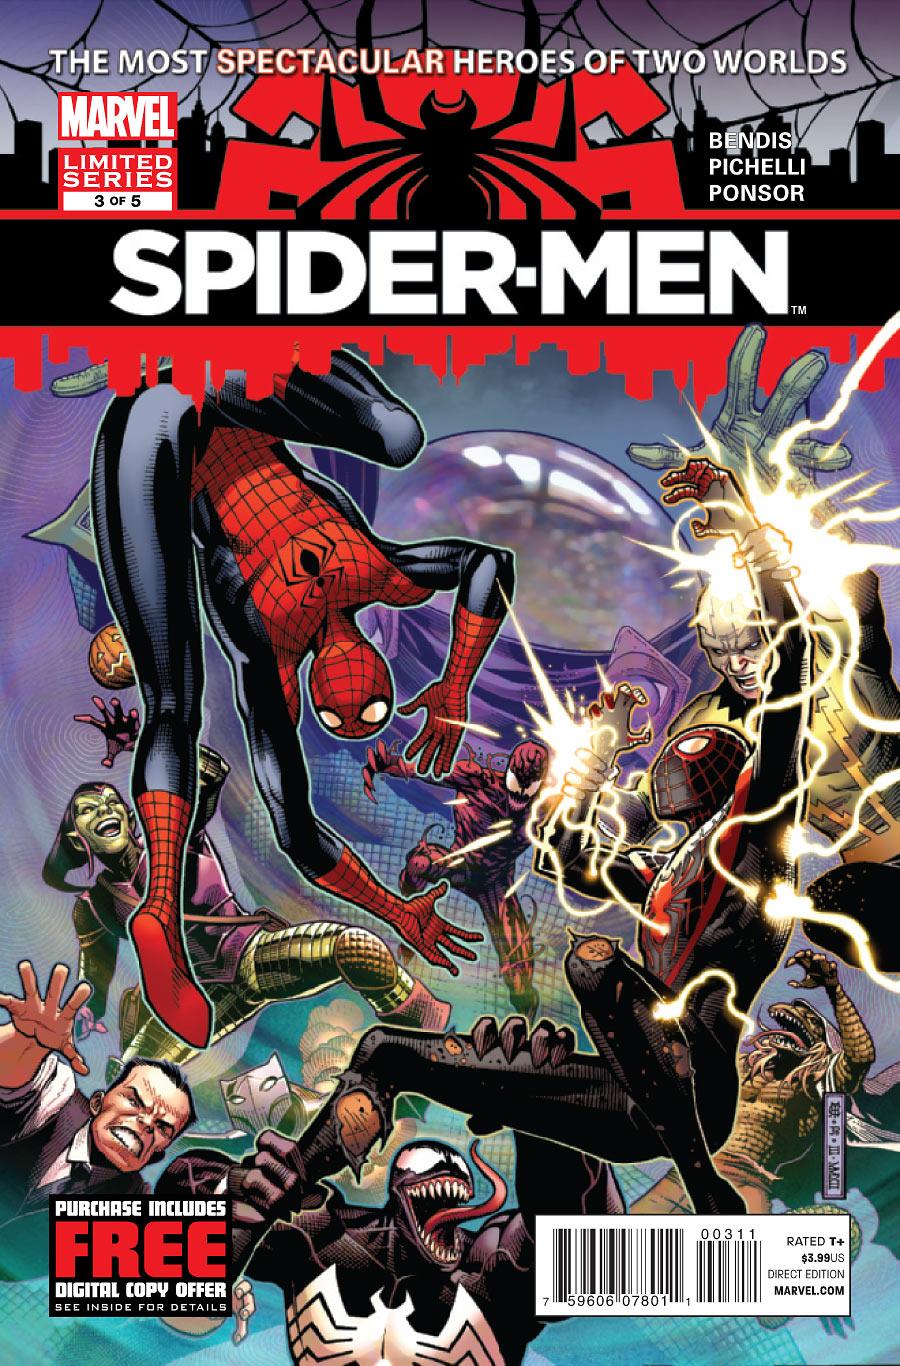 Spider-Men Vol. 1 #3